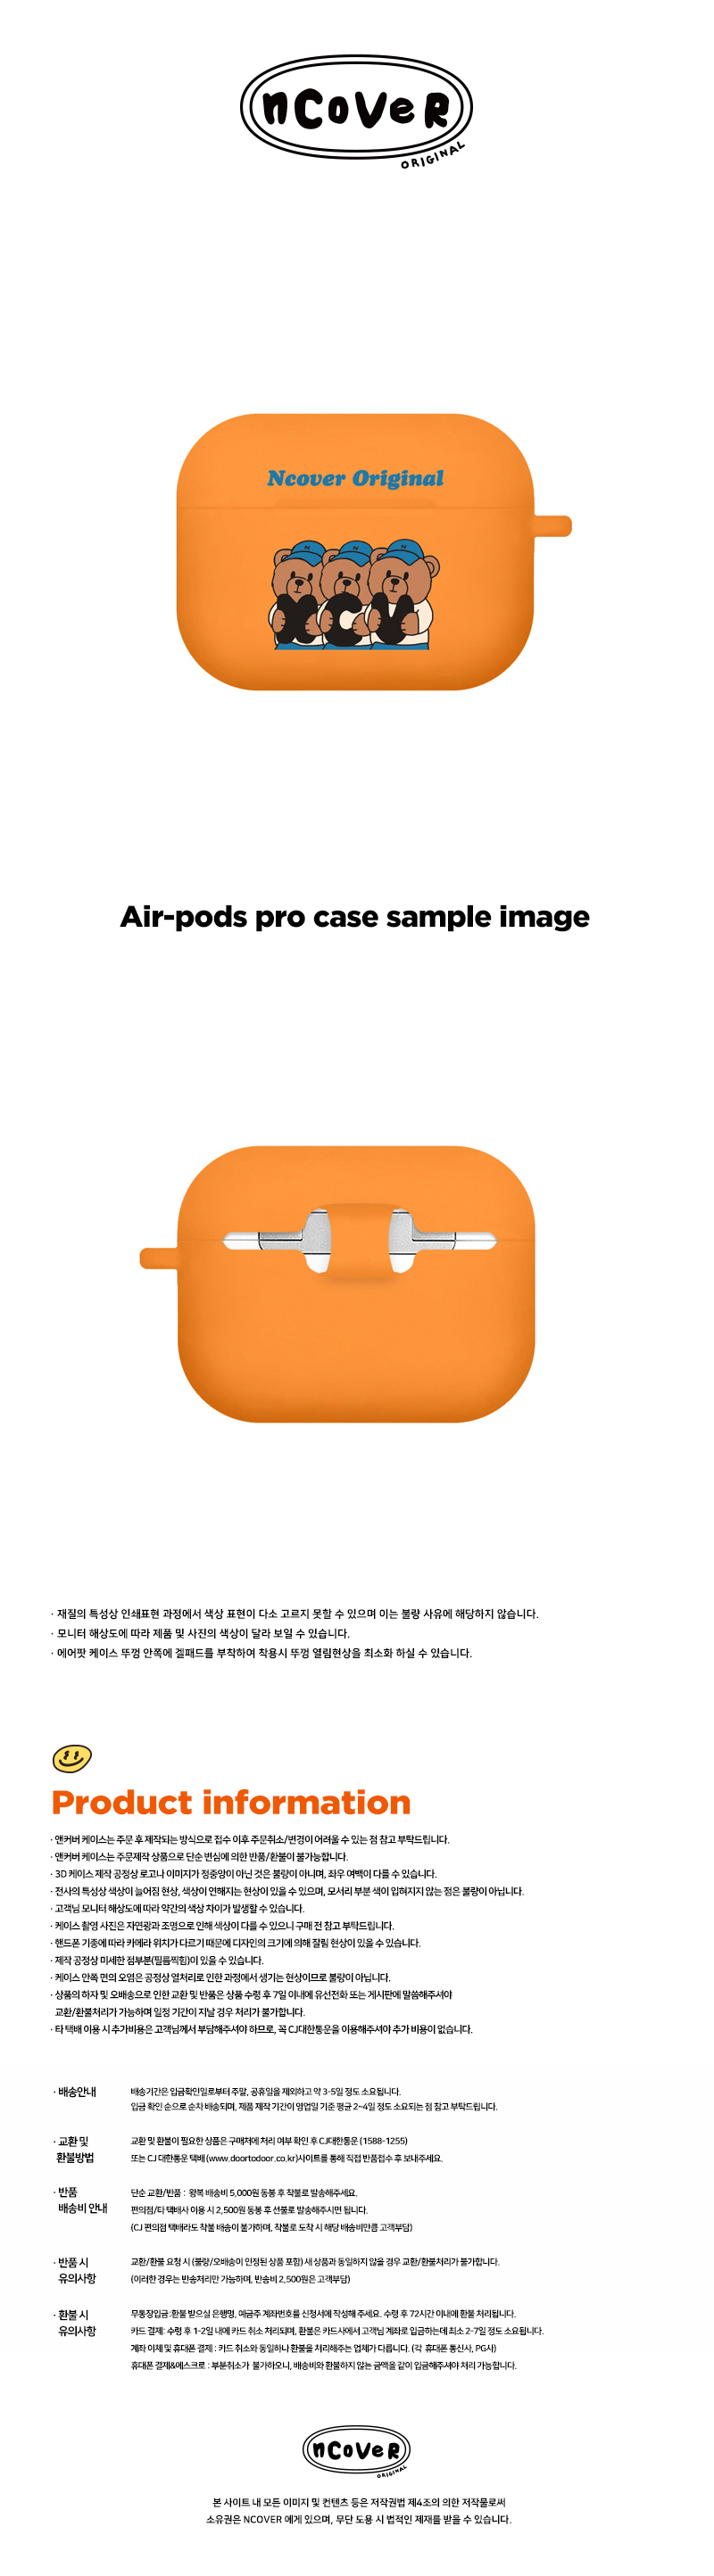  Ncv alphabet bruin-orange(airpods pro jelly)  15,000원 - 바이인터내셔널주식회사 디지털, 이어폰/헤드폰, 이어폰/헤드폰 액세서리, 에어팟/에어팟프로 케이스 바보사랑  Ncv alphabet bruin-orange(airpods pro jelly)  15,000원 - 바이인터내셔널주식회사 디지털, 이어폰/헤드폰, 이어폰/헤드폰 액세서리, 에어팟/에어팟프로 케이스 바보사랑